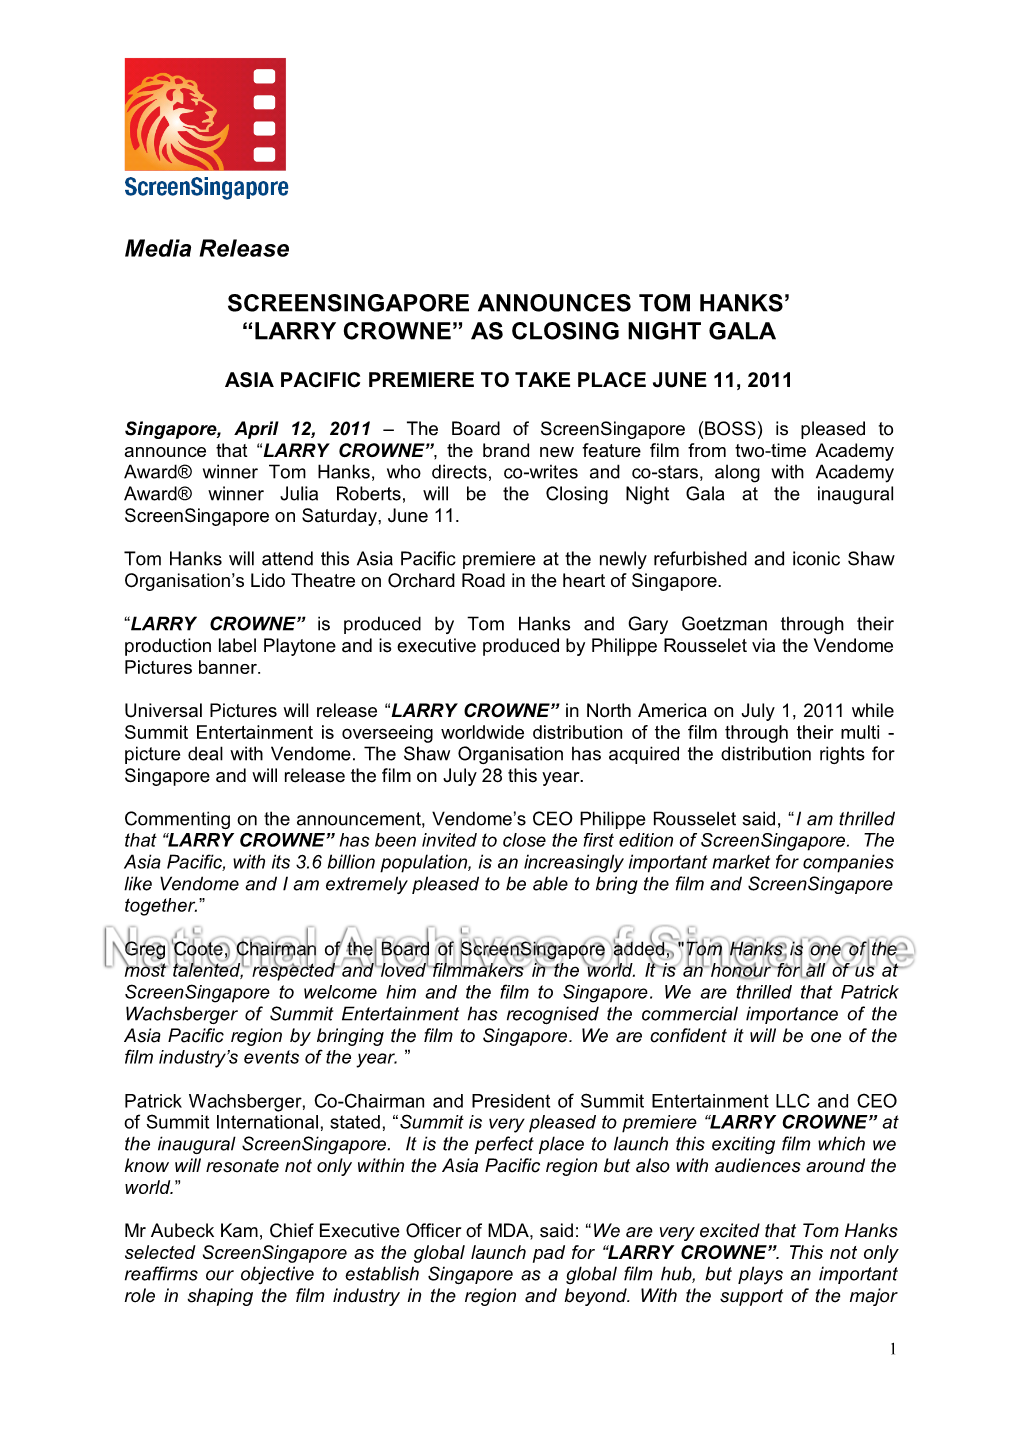 Media Release SCREENSINGAPORE ANNOUNCES TOM HANKS' “LARRY CROWNE” AS CLOSING NIGHT GALA